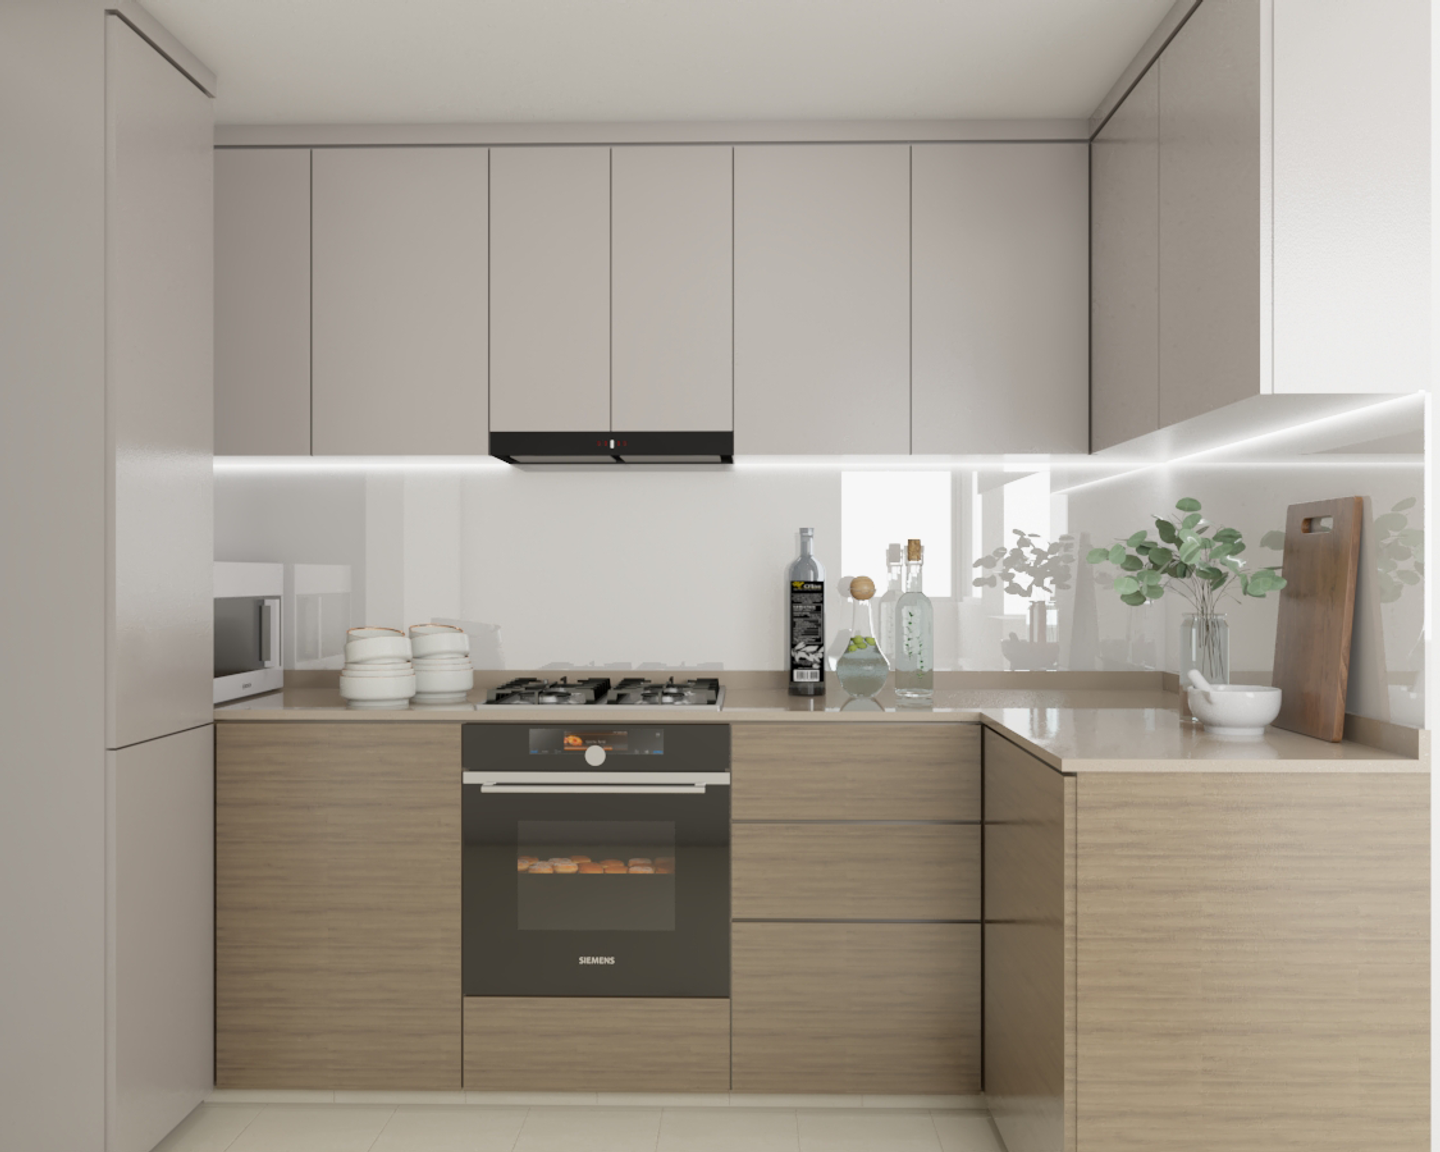 Light Wooden Texture Modern Kitchen Design with In-Built Appliances ...